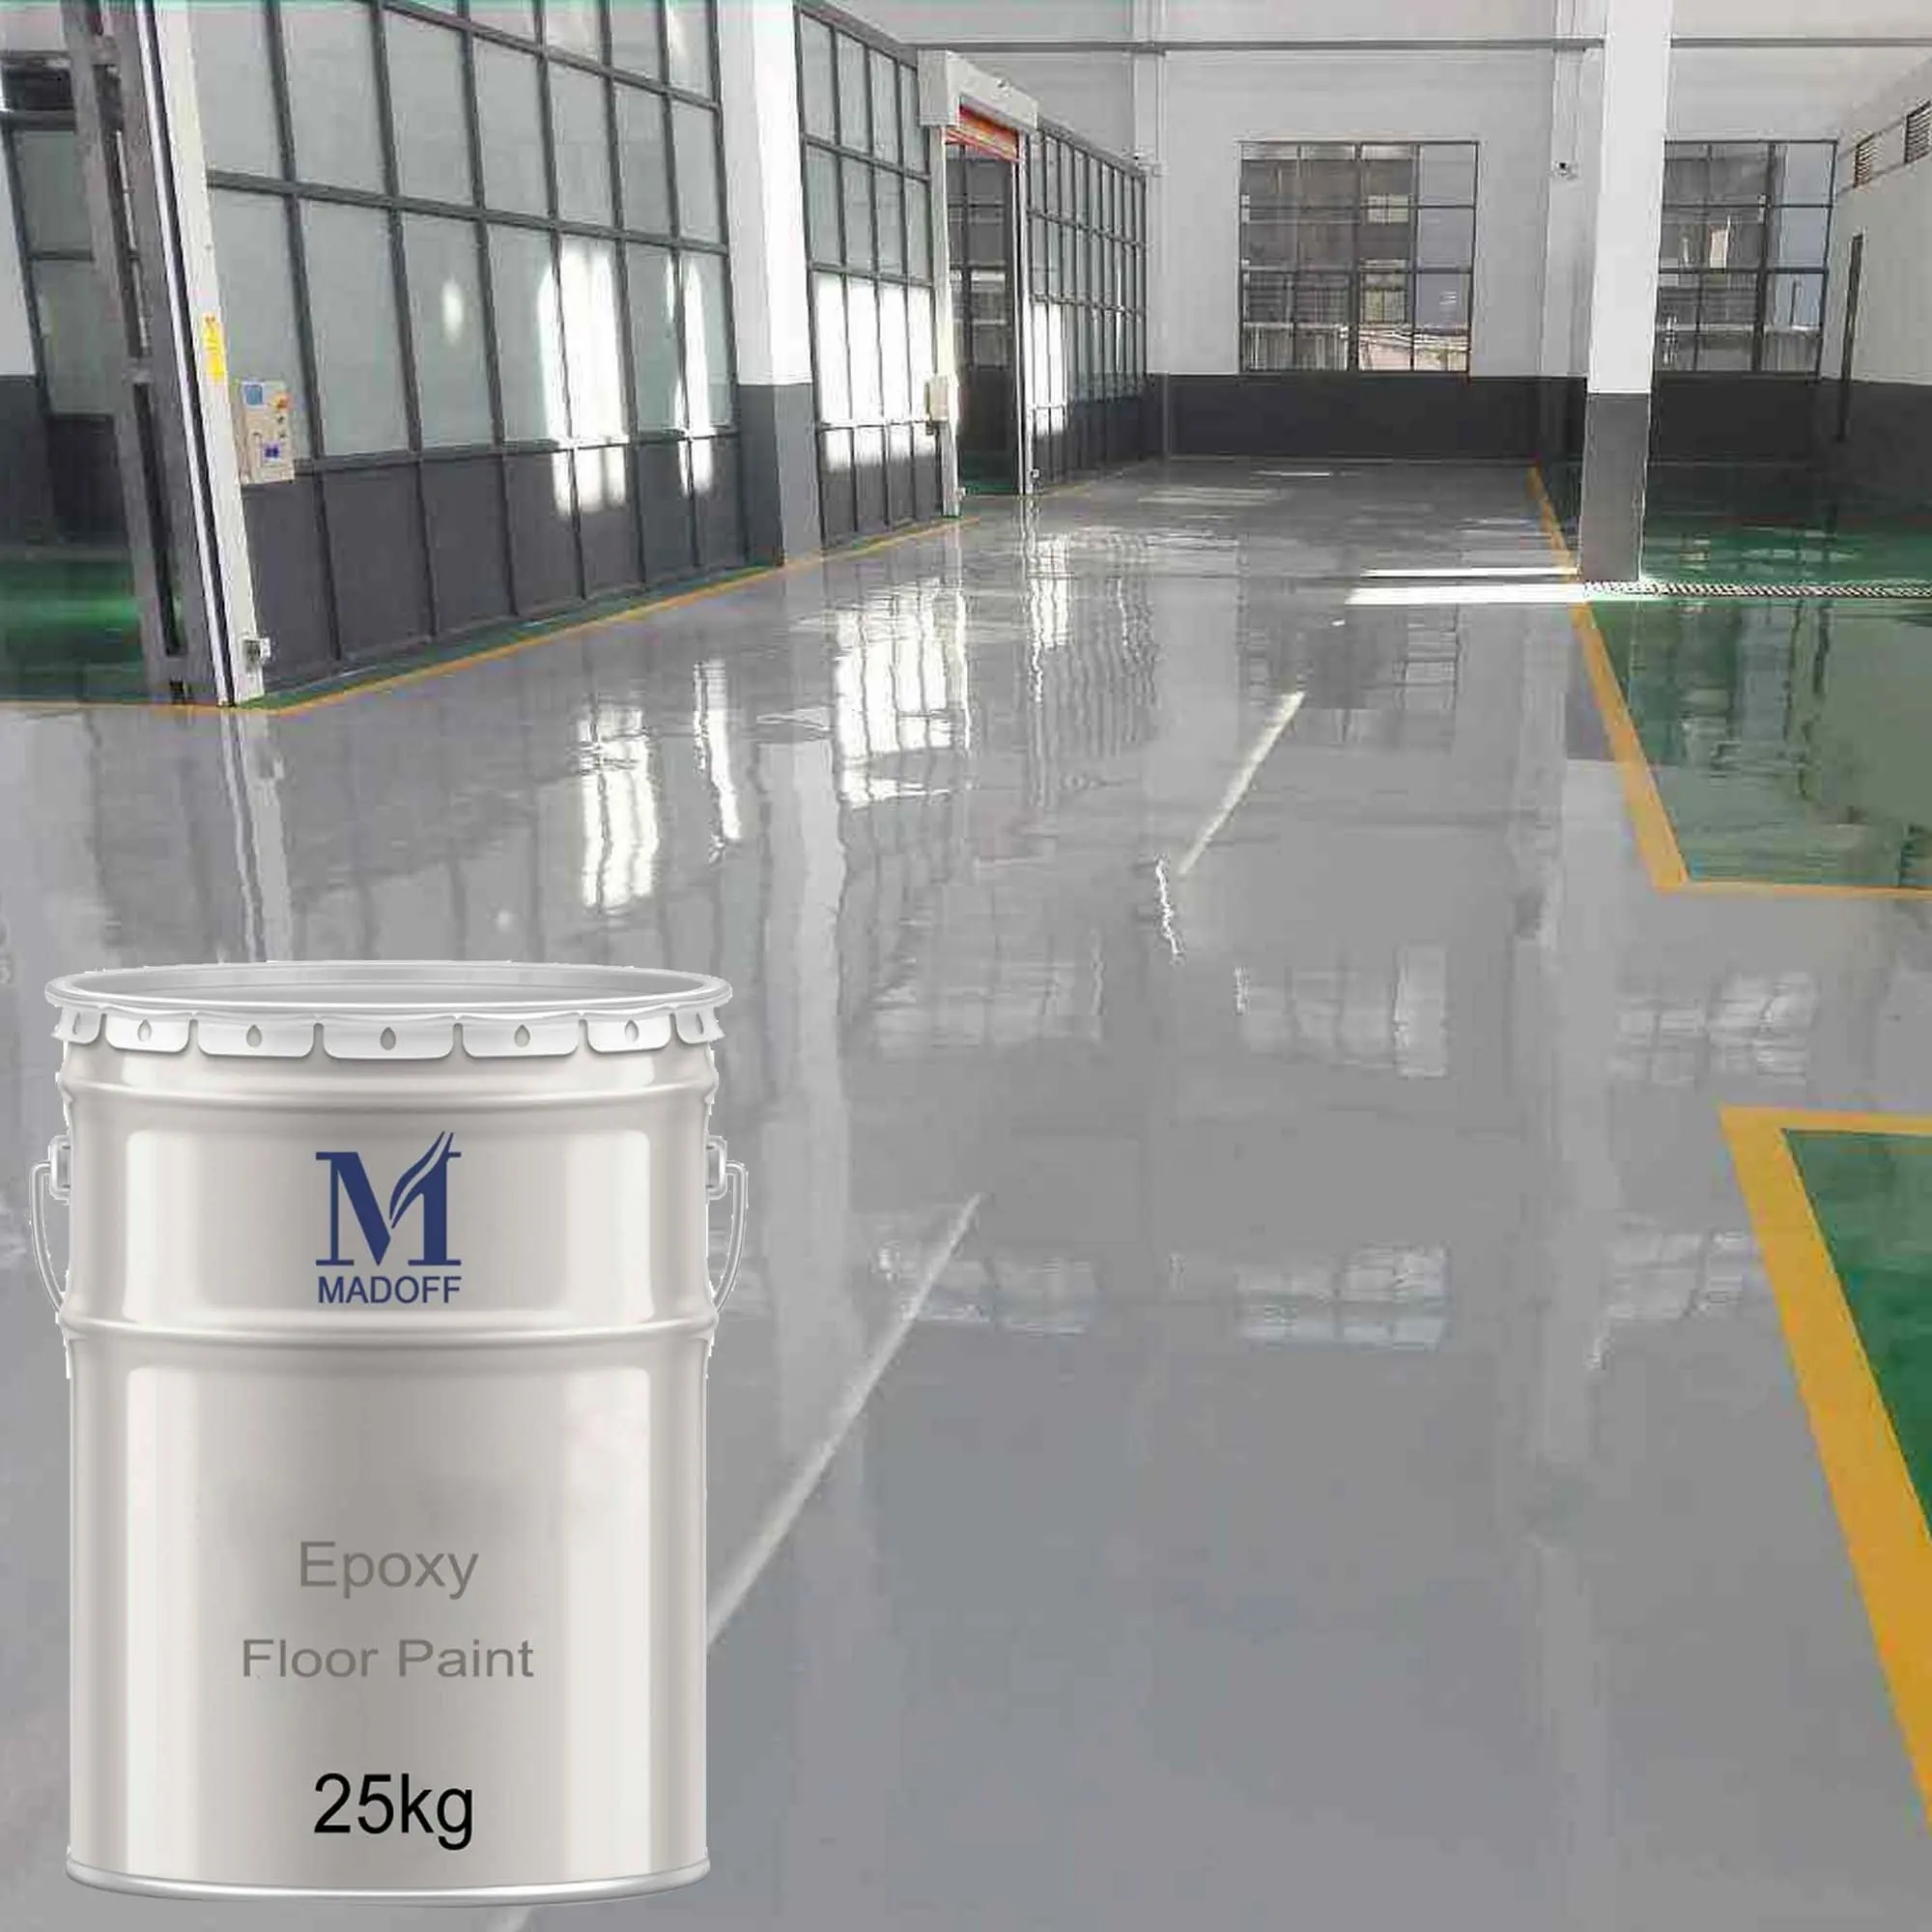 Wholesale Epoxy Resin For Floors Industry Epoxy resin coating for concrete floors